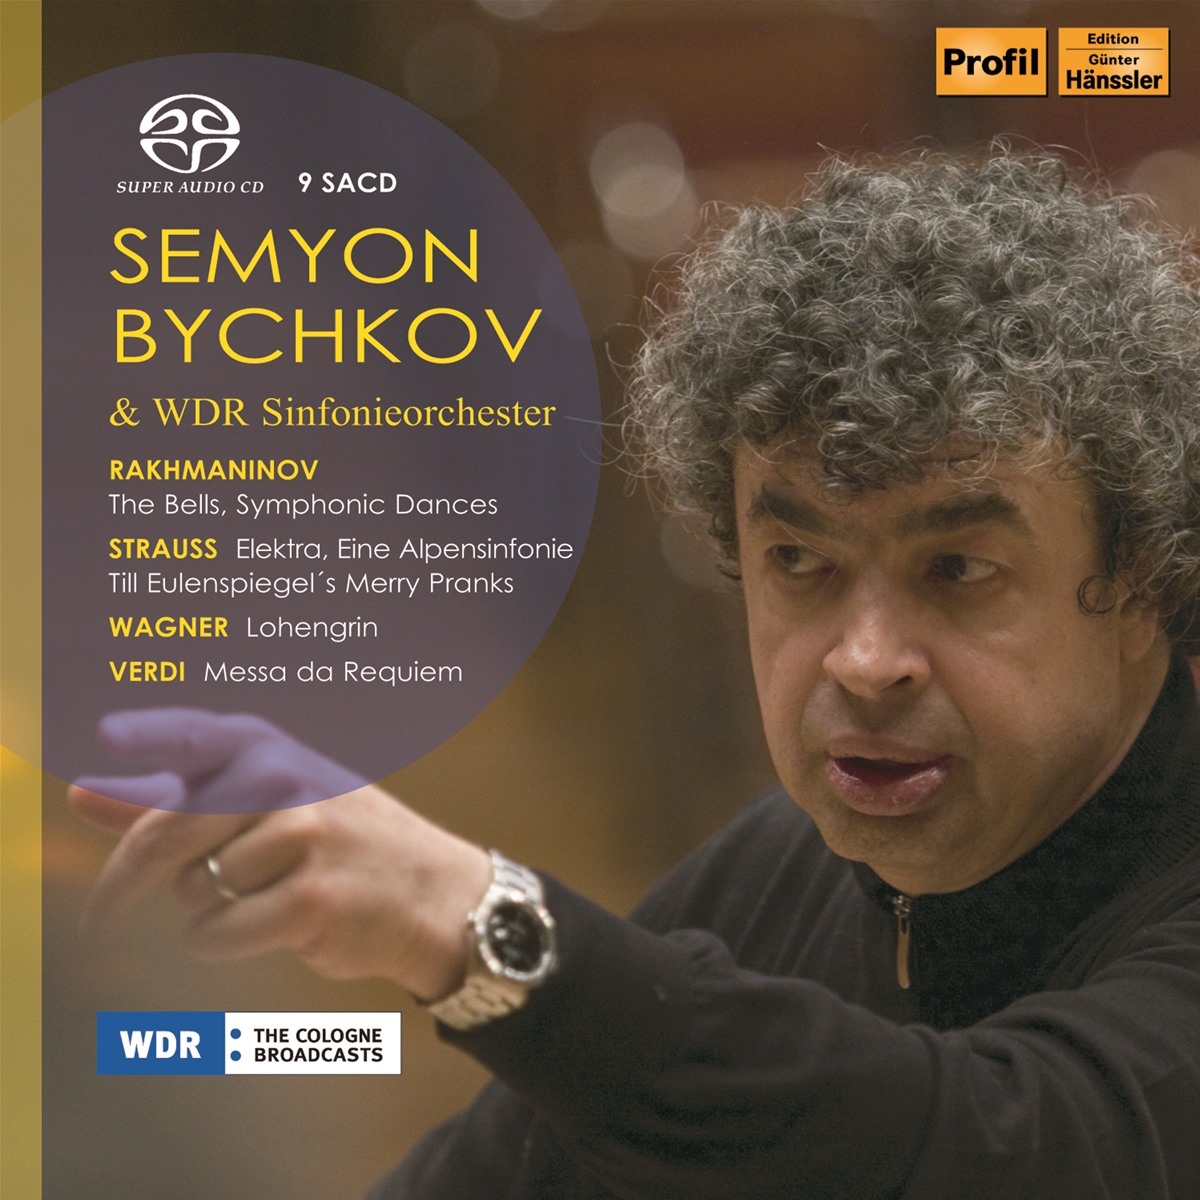 Semyon Bychkov - The conductor